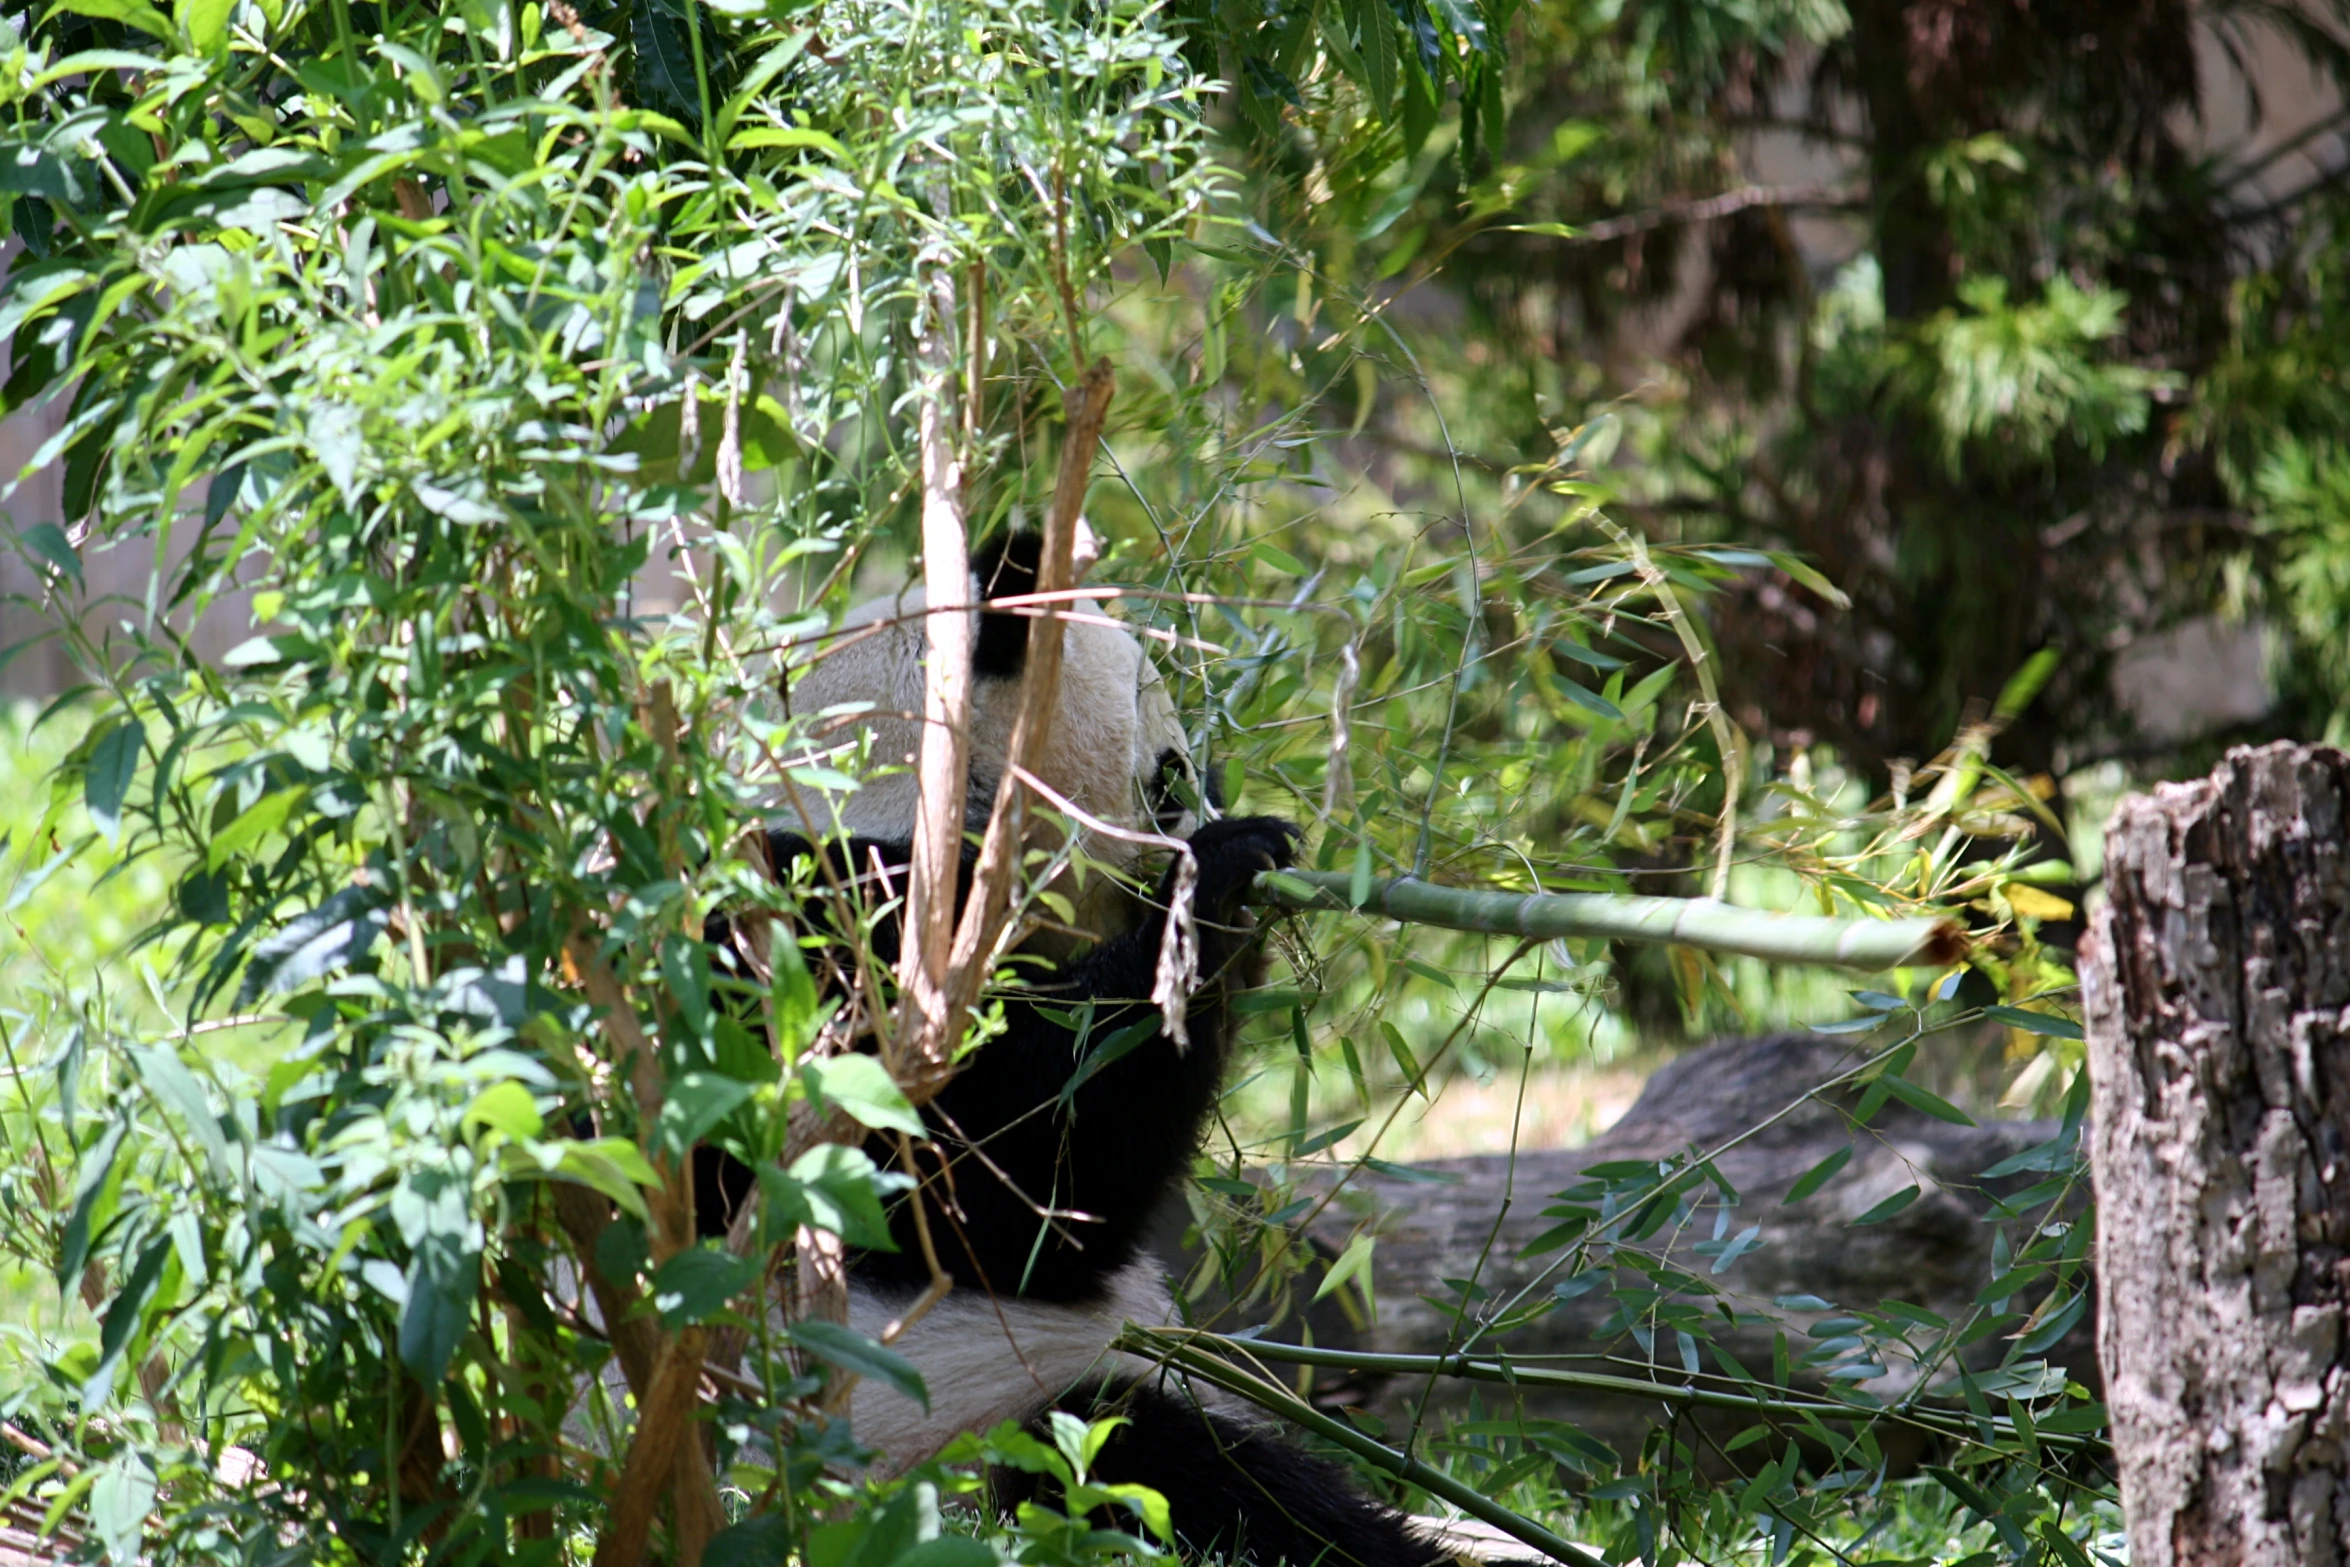 a panda walking through a bamboo forest